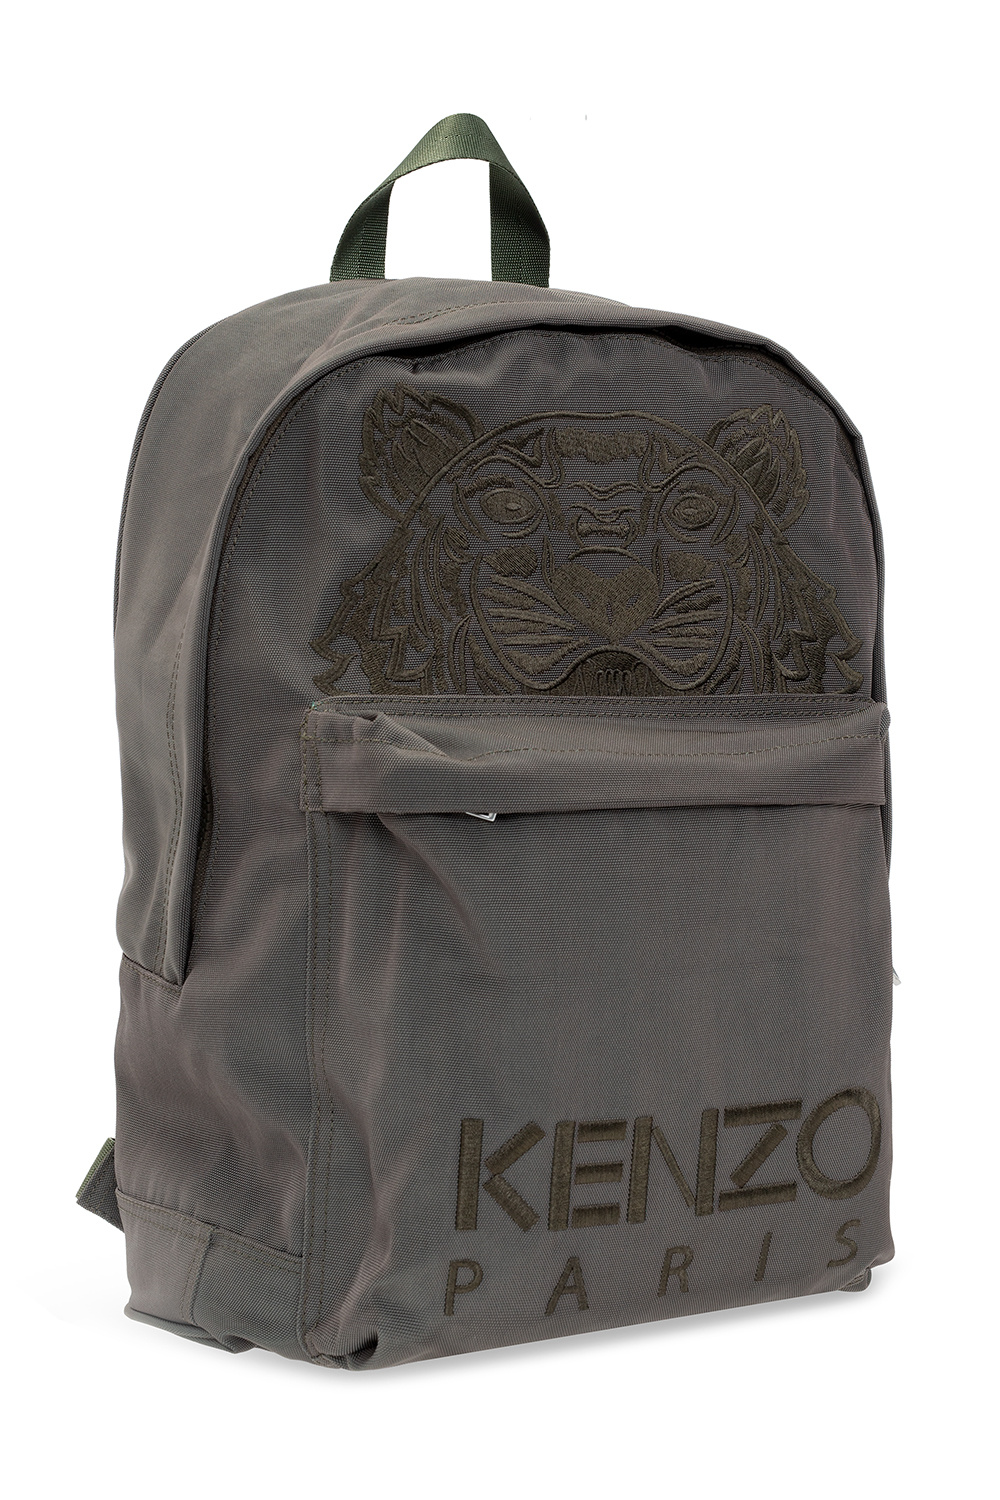 Kenzo cloud clutch bag Brown